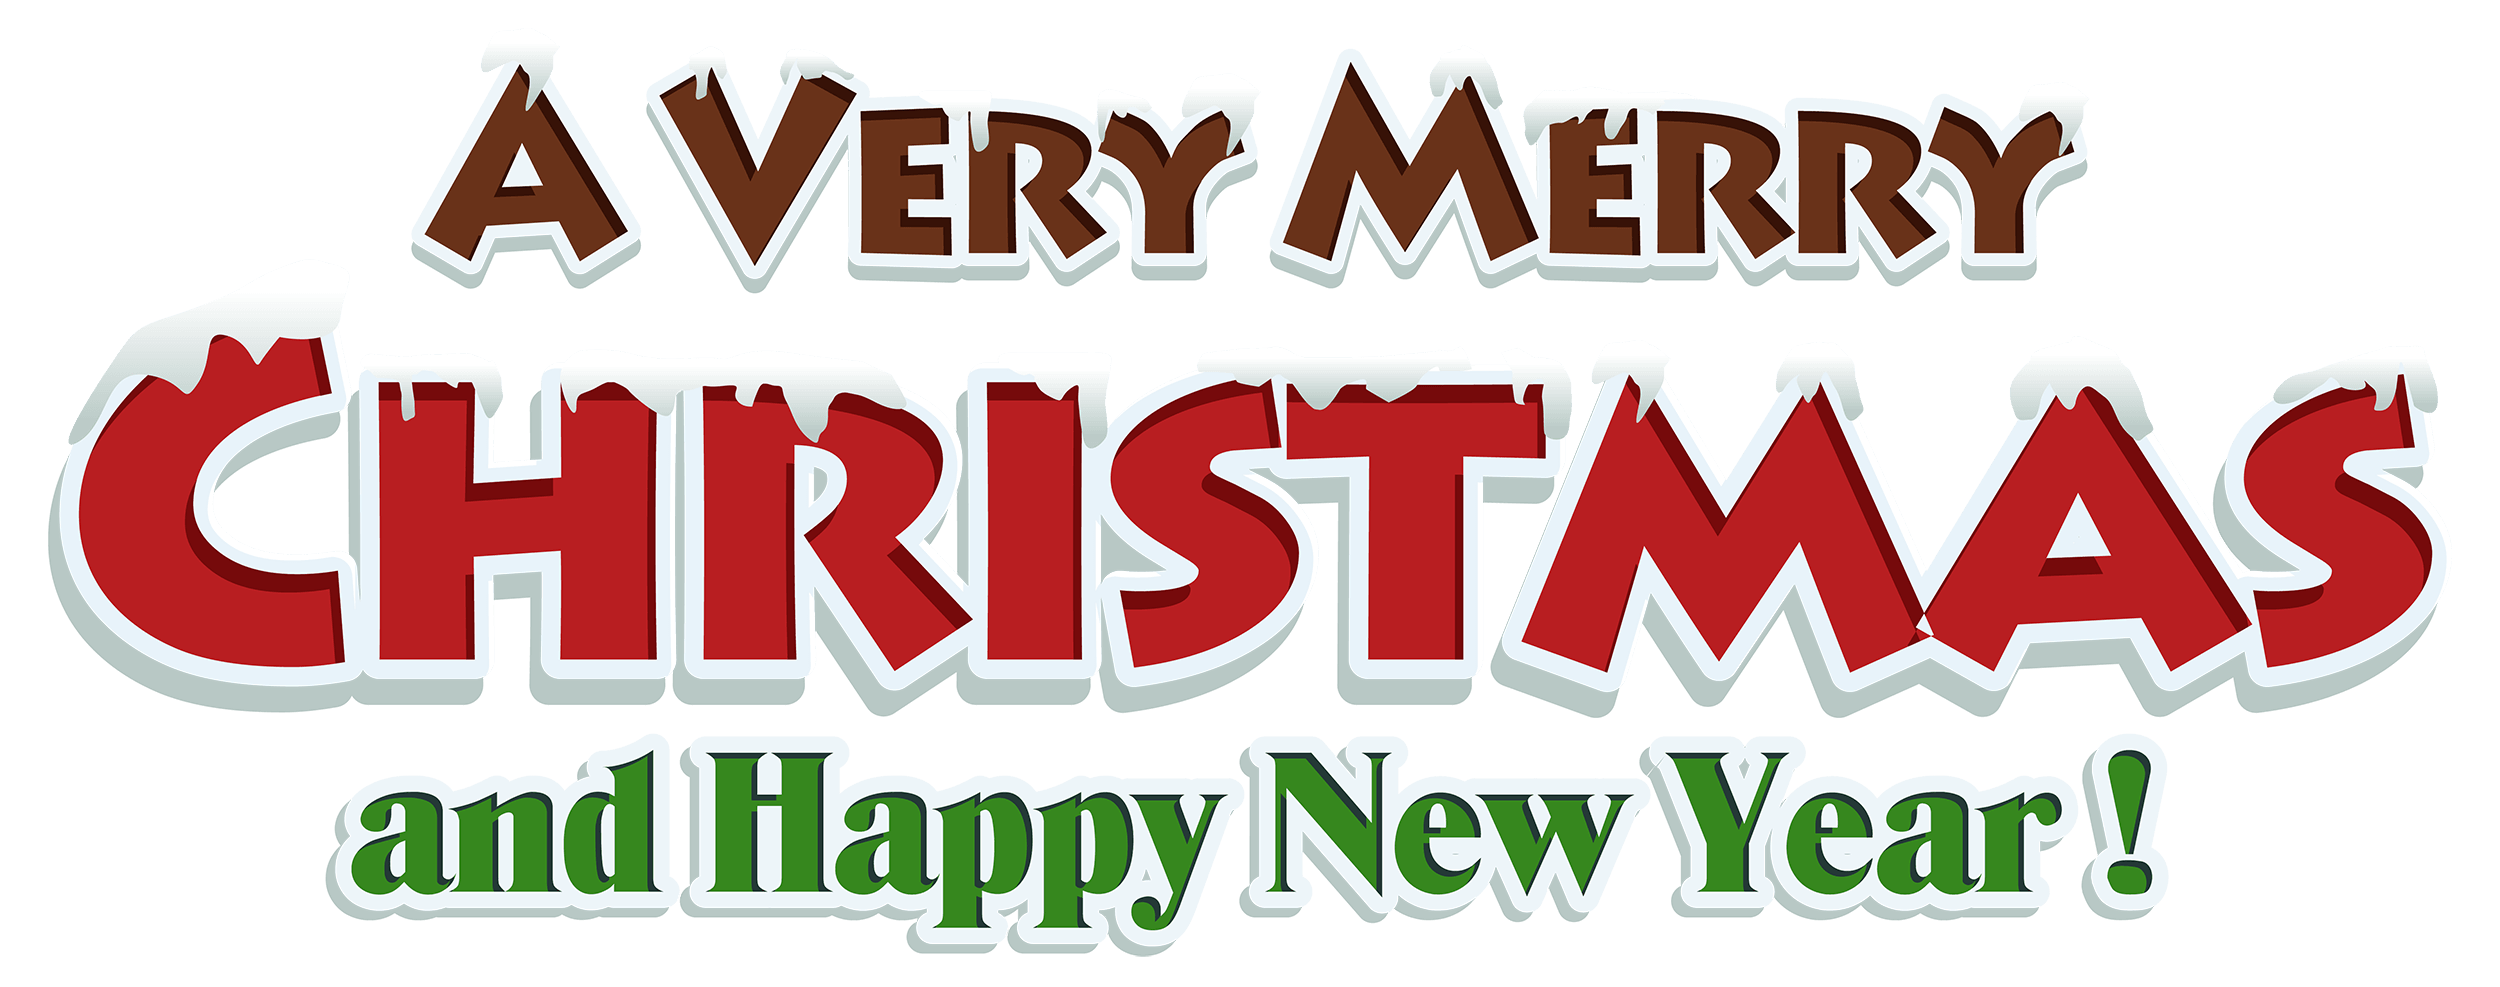 Merry Christmas and Happy New Year logo, logotype